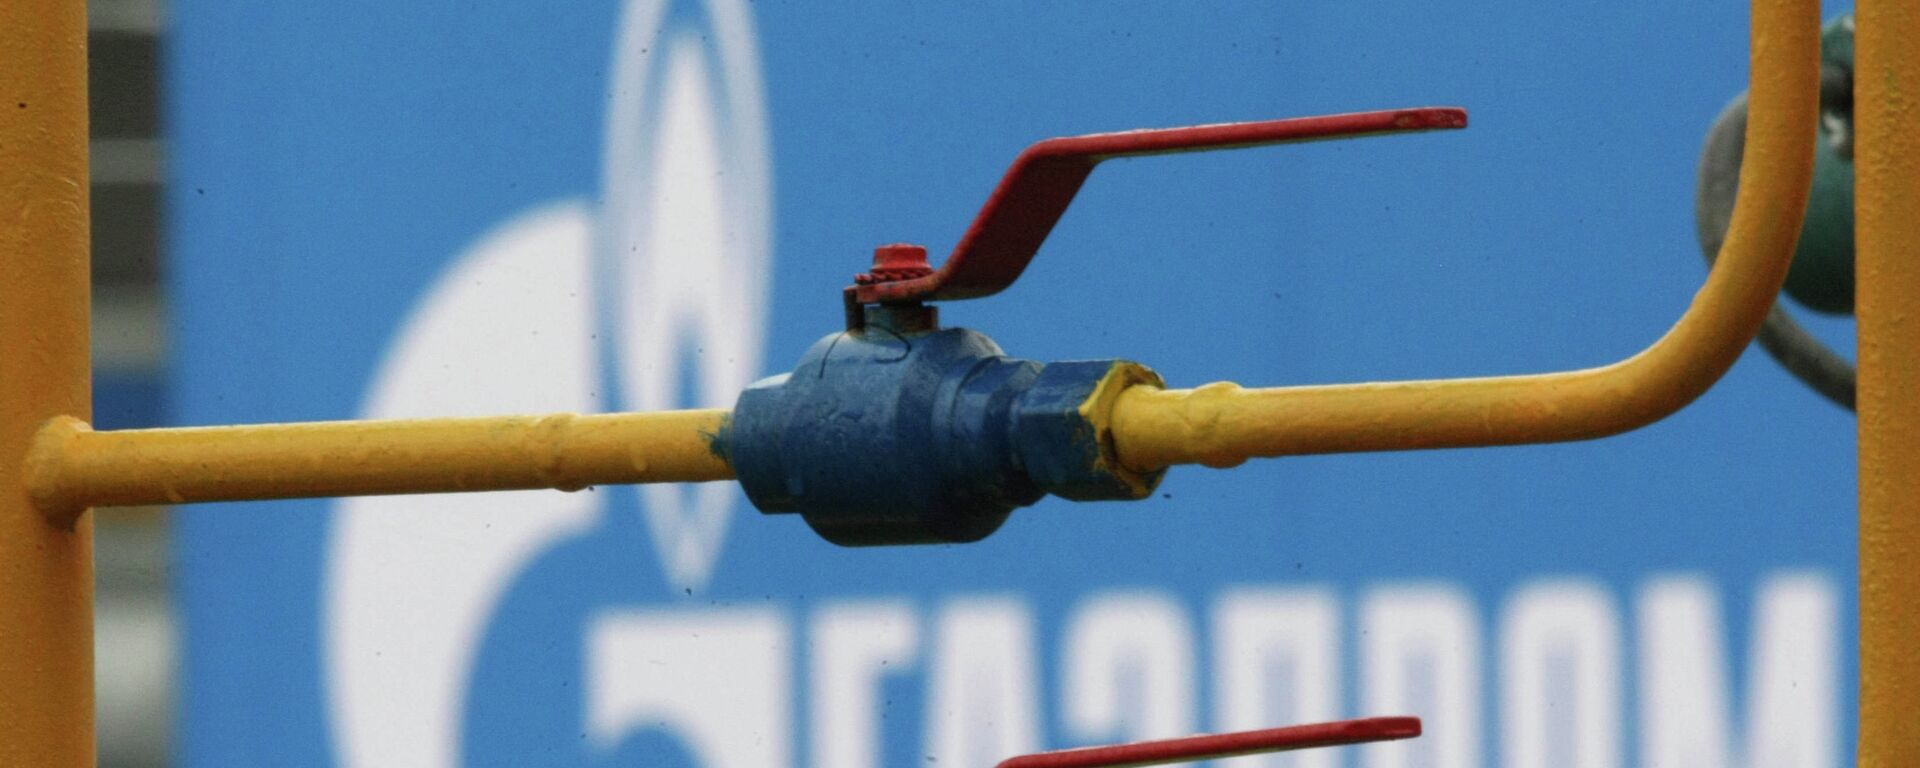 Gazprom - Sputnik Việt Nam, 1920, 29.04.2019